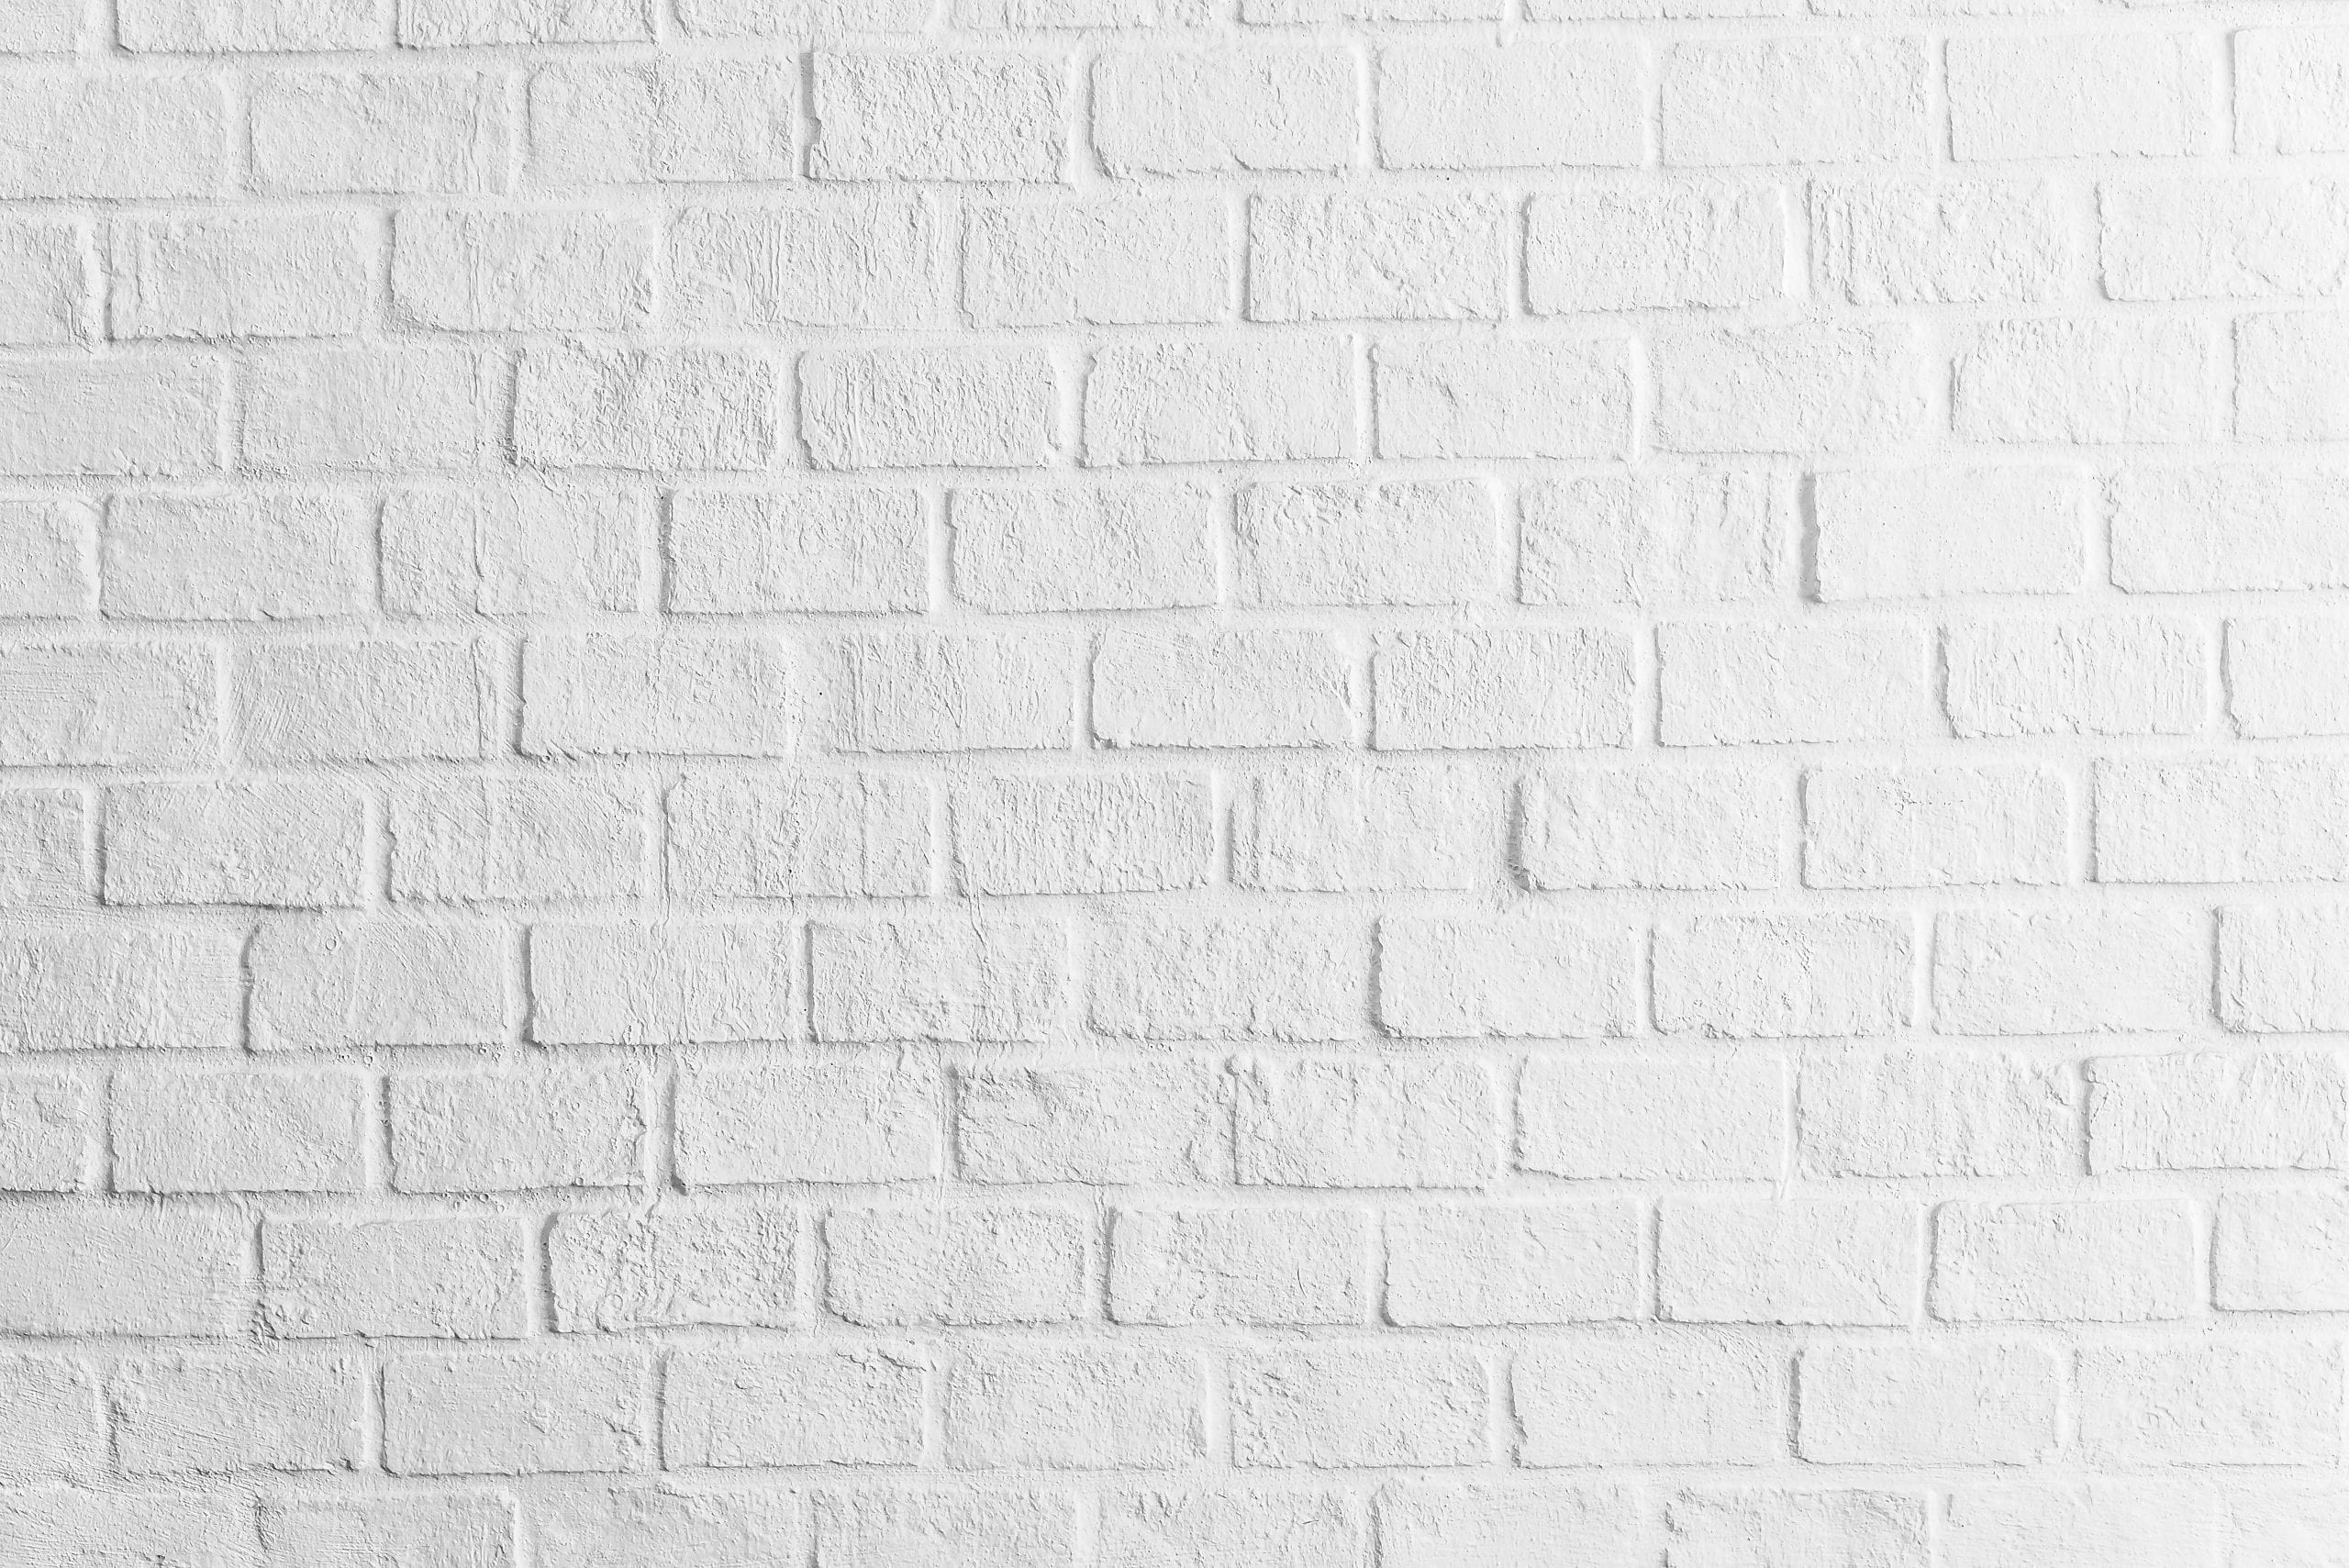 White brick wall textures background - aimsmmarketing.com